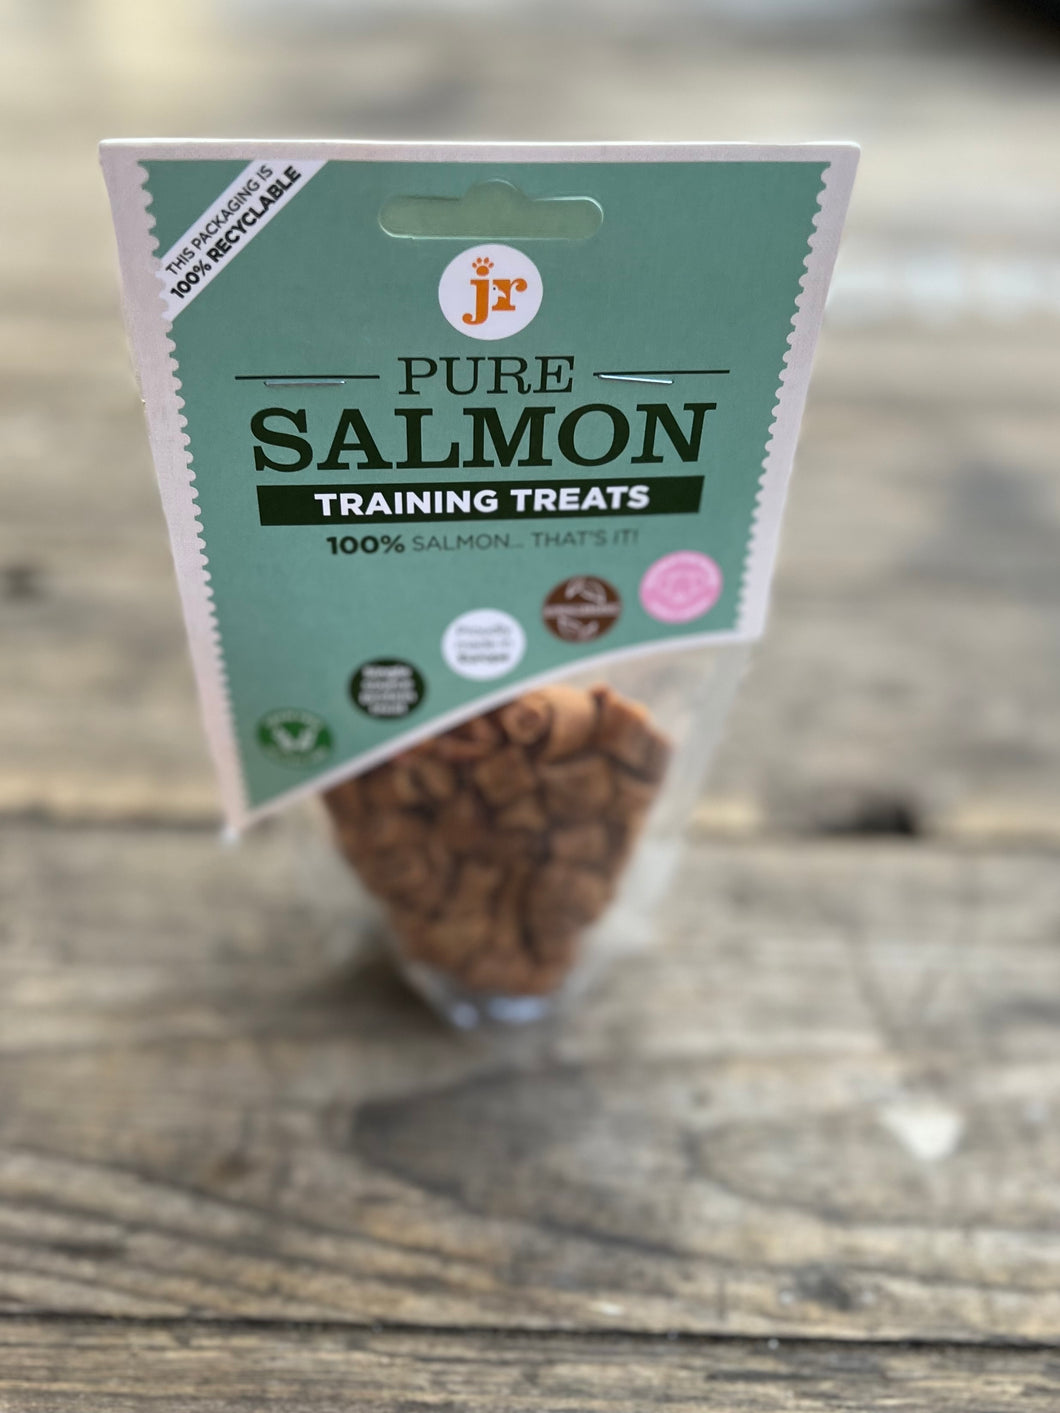 Salmon training treats